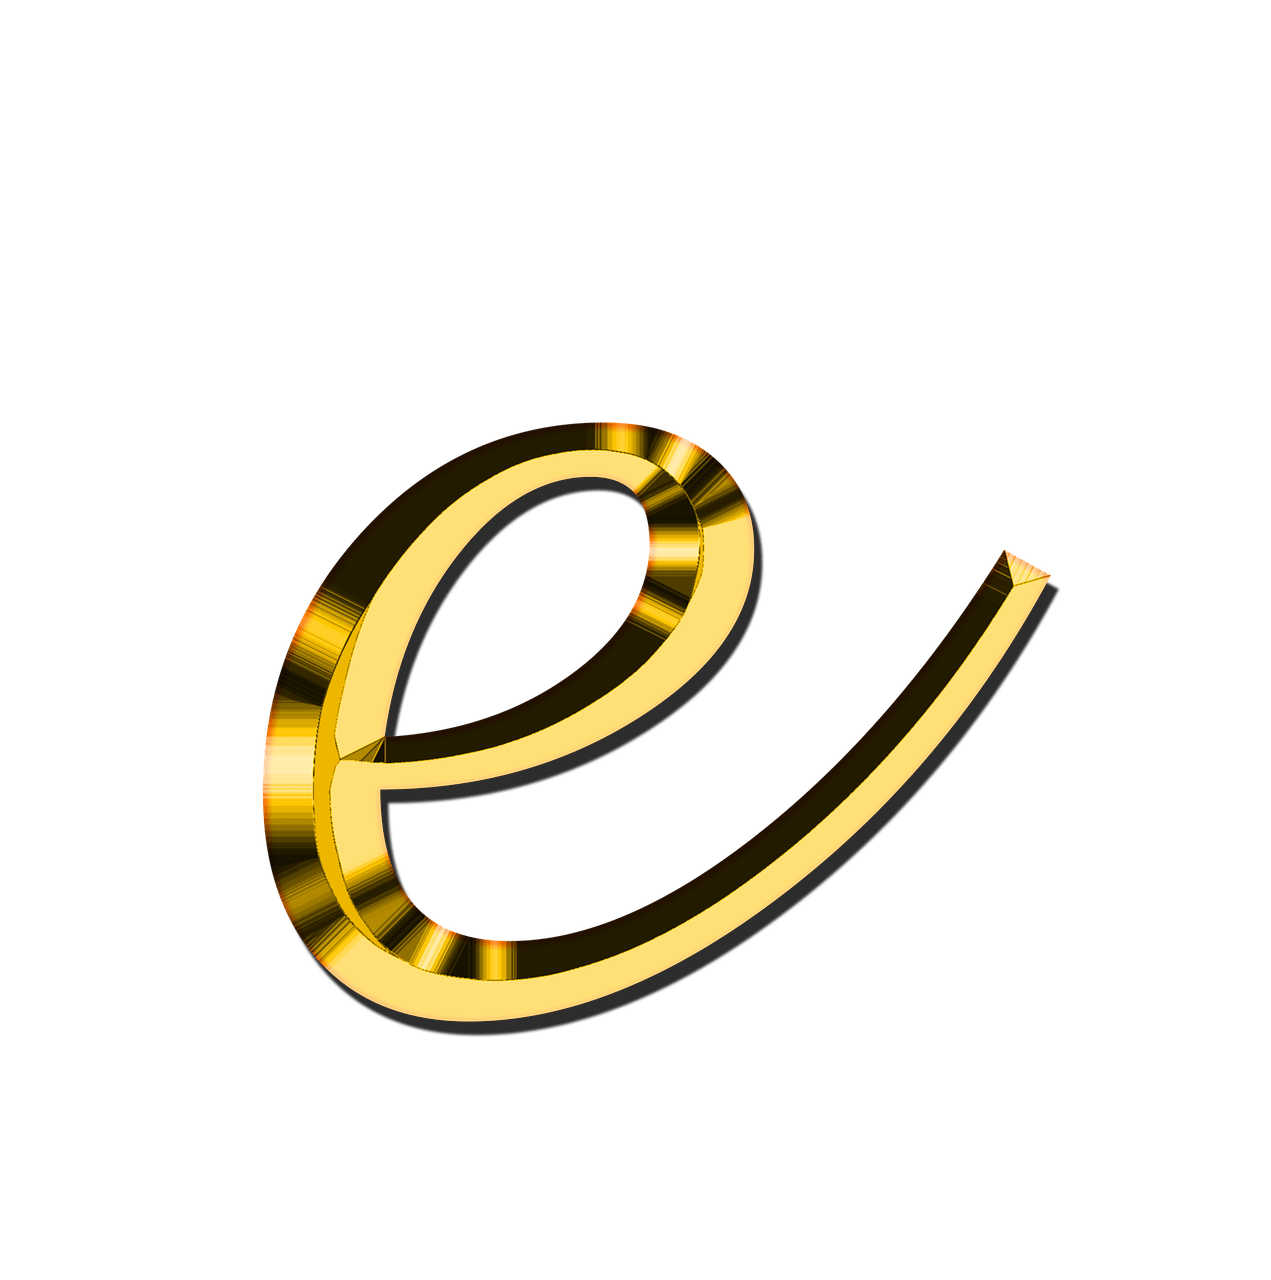 E Letter Logo Png Free Transparent Png Logos Images